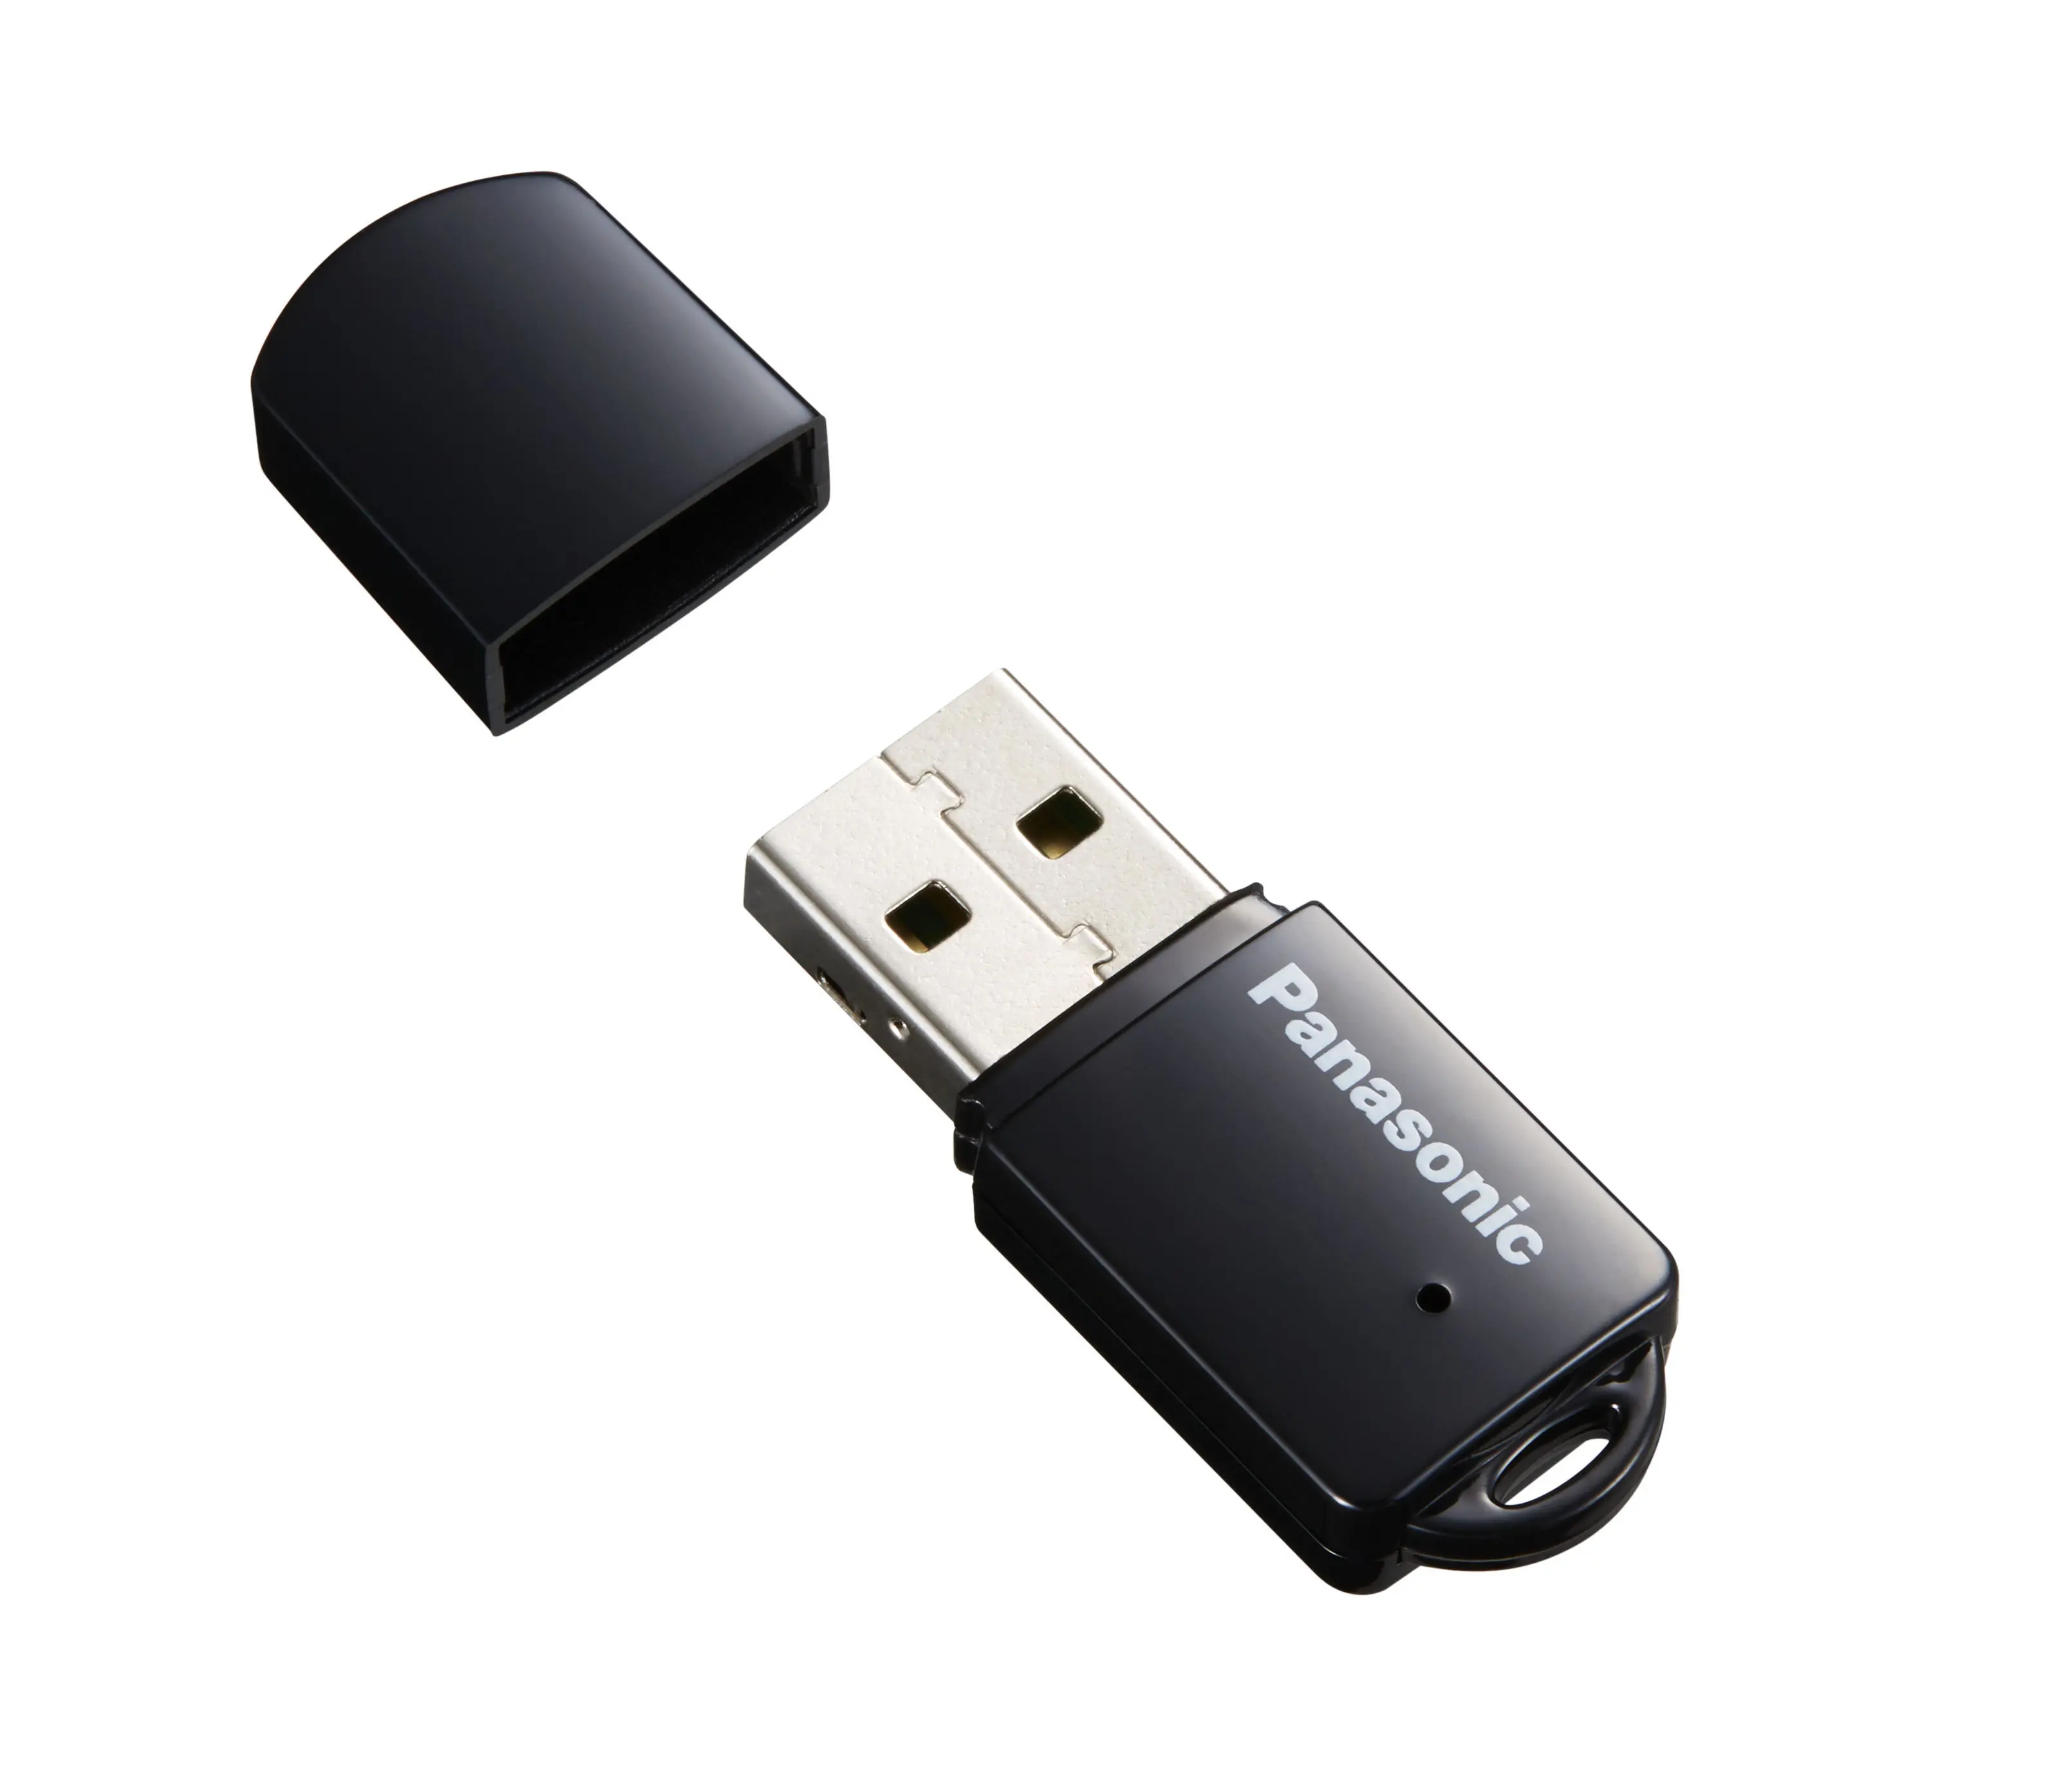 Panasonic AJ-WM50E Dual Band USB WiFi Module - photo